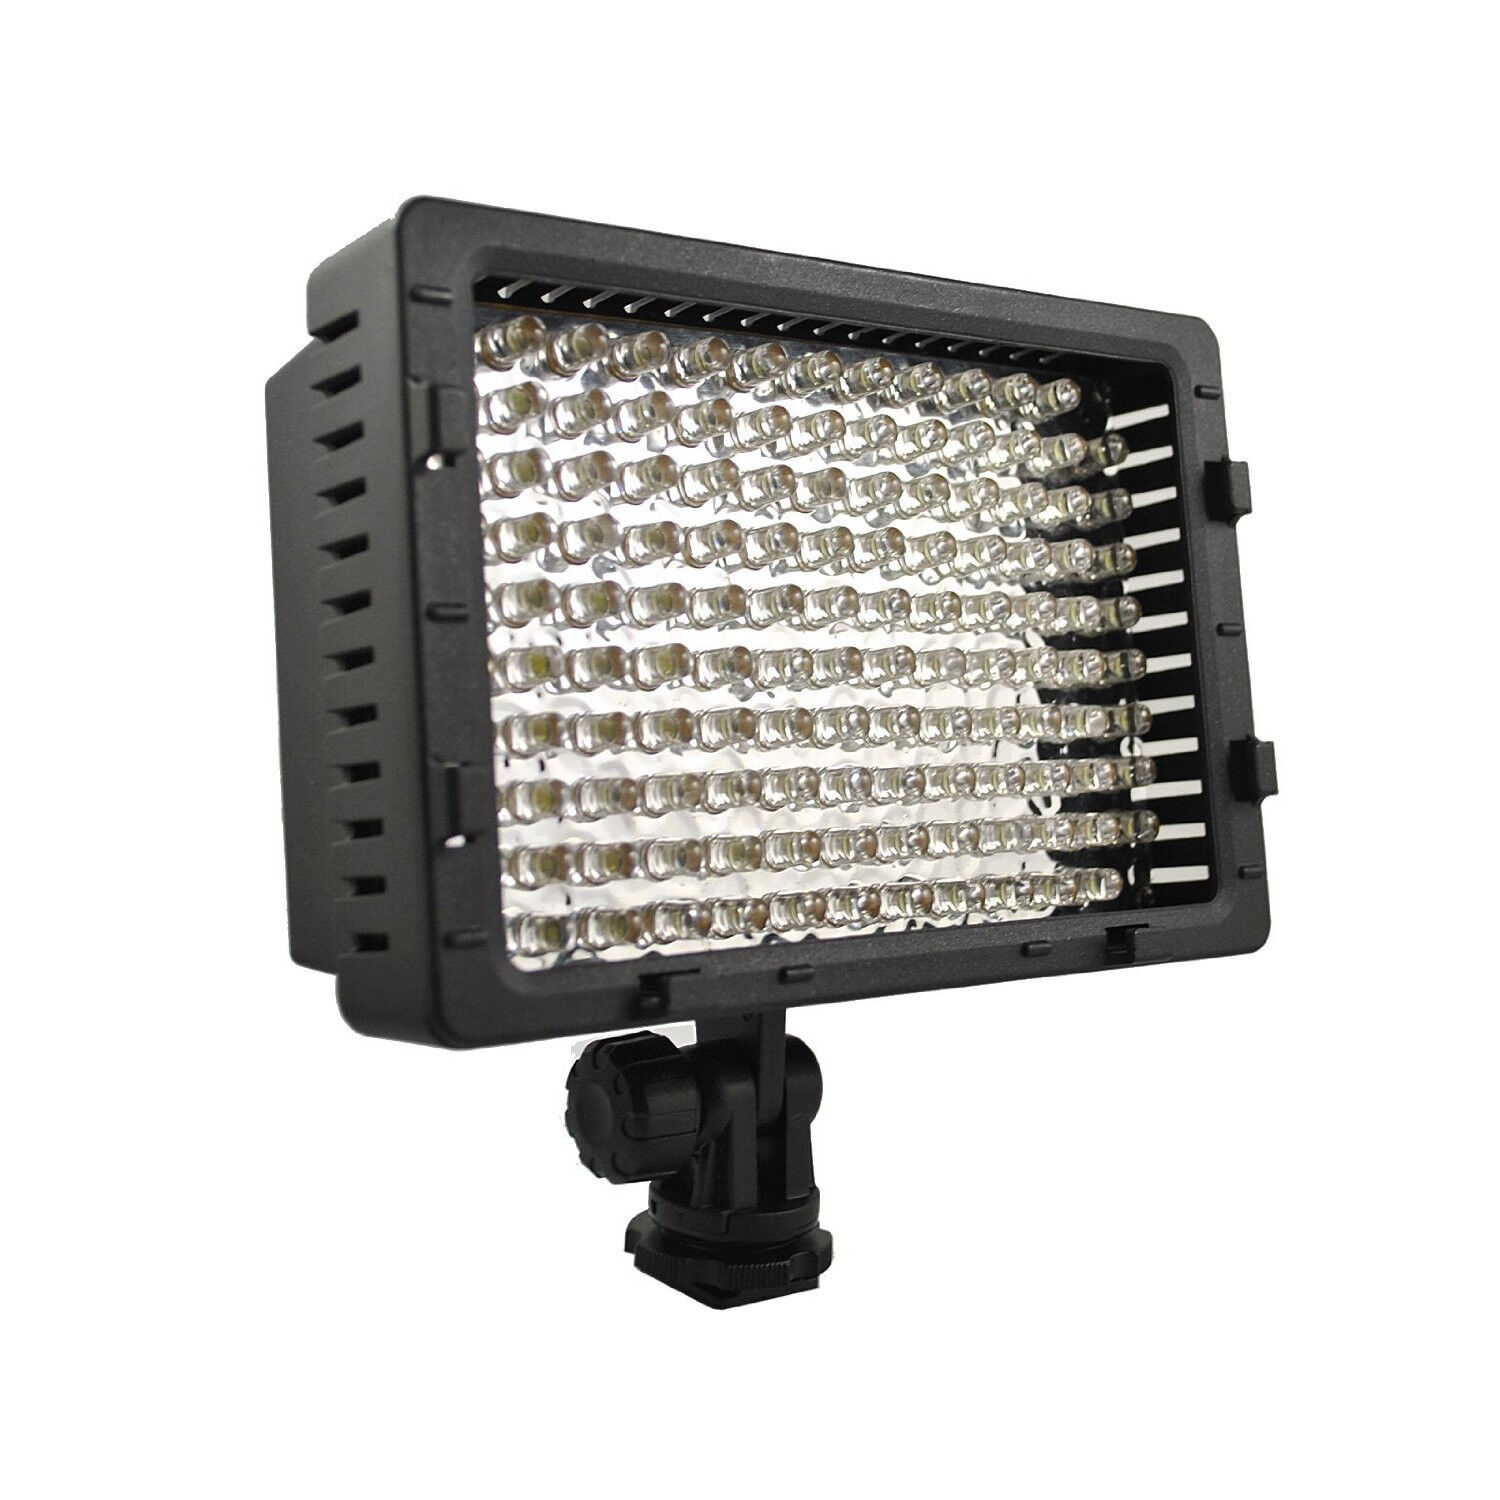 Pro XF105 LED video light for Canon XF100 XL2 XL1 HD HDV AVCHD camcorder Laatste klus, echte garantie